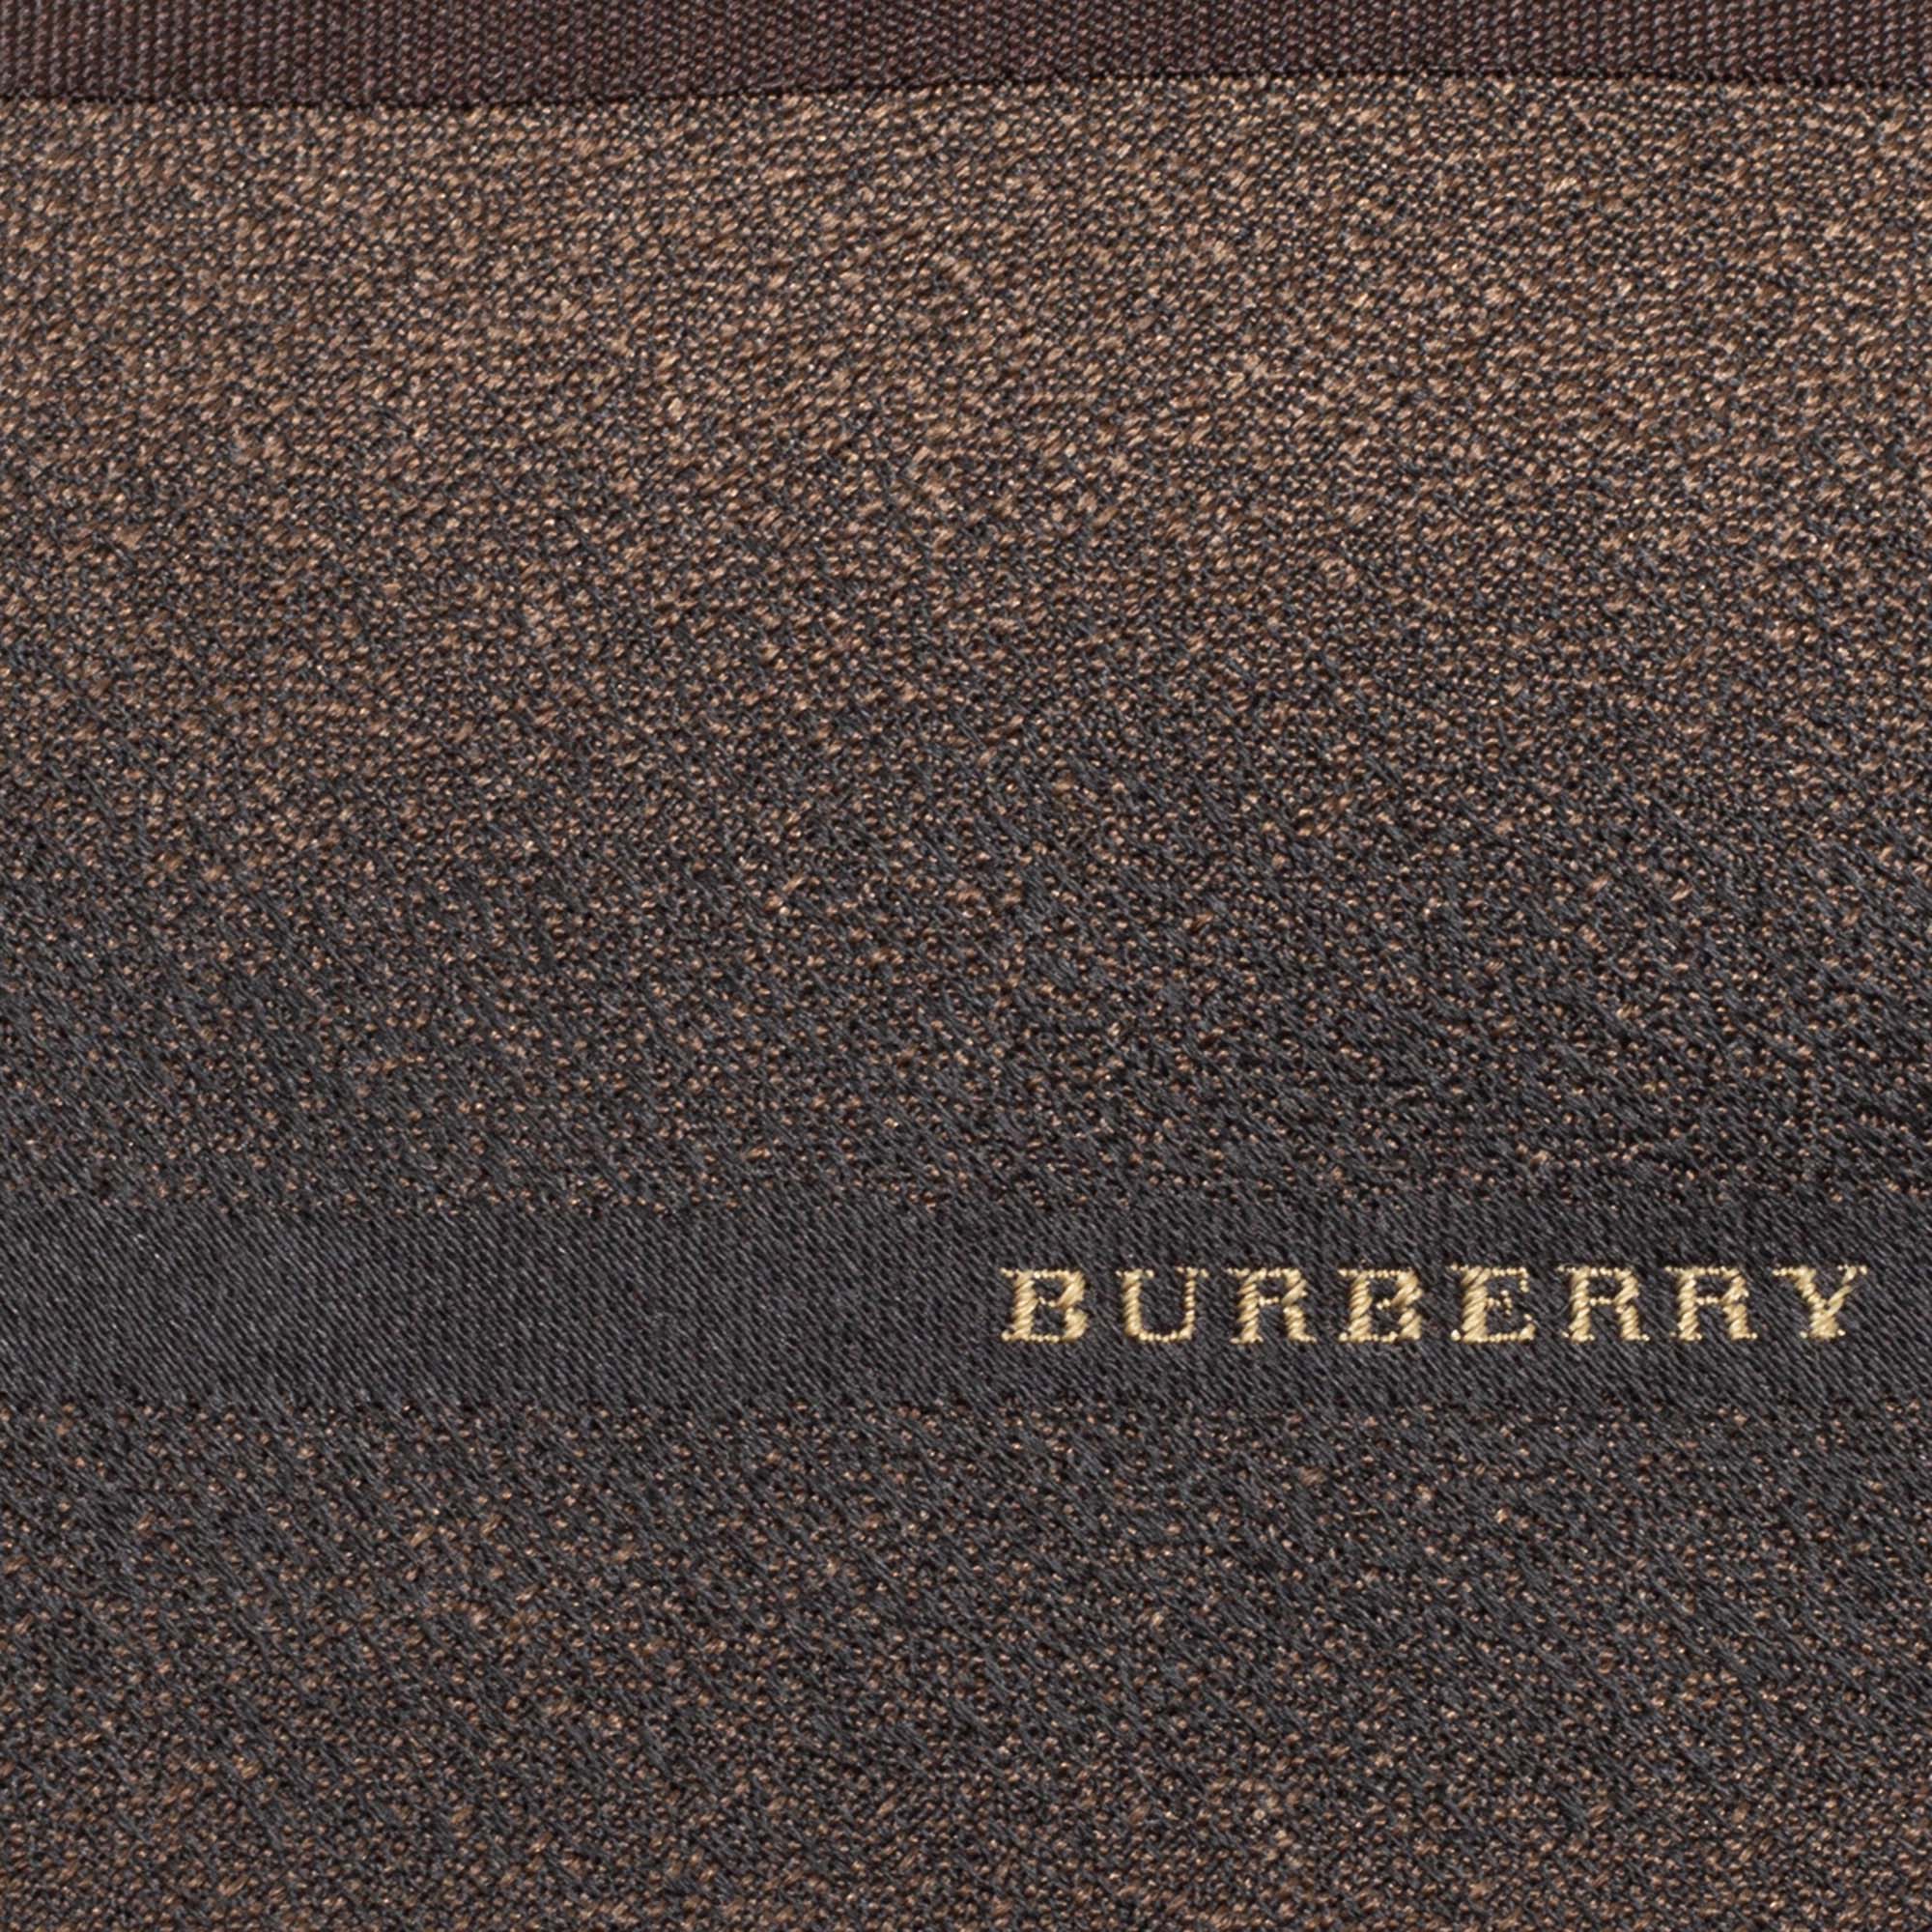 Burberry Brown Striped Silk Tie